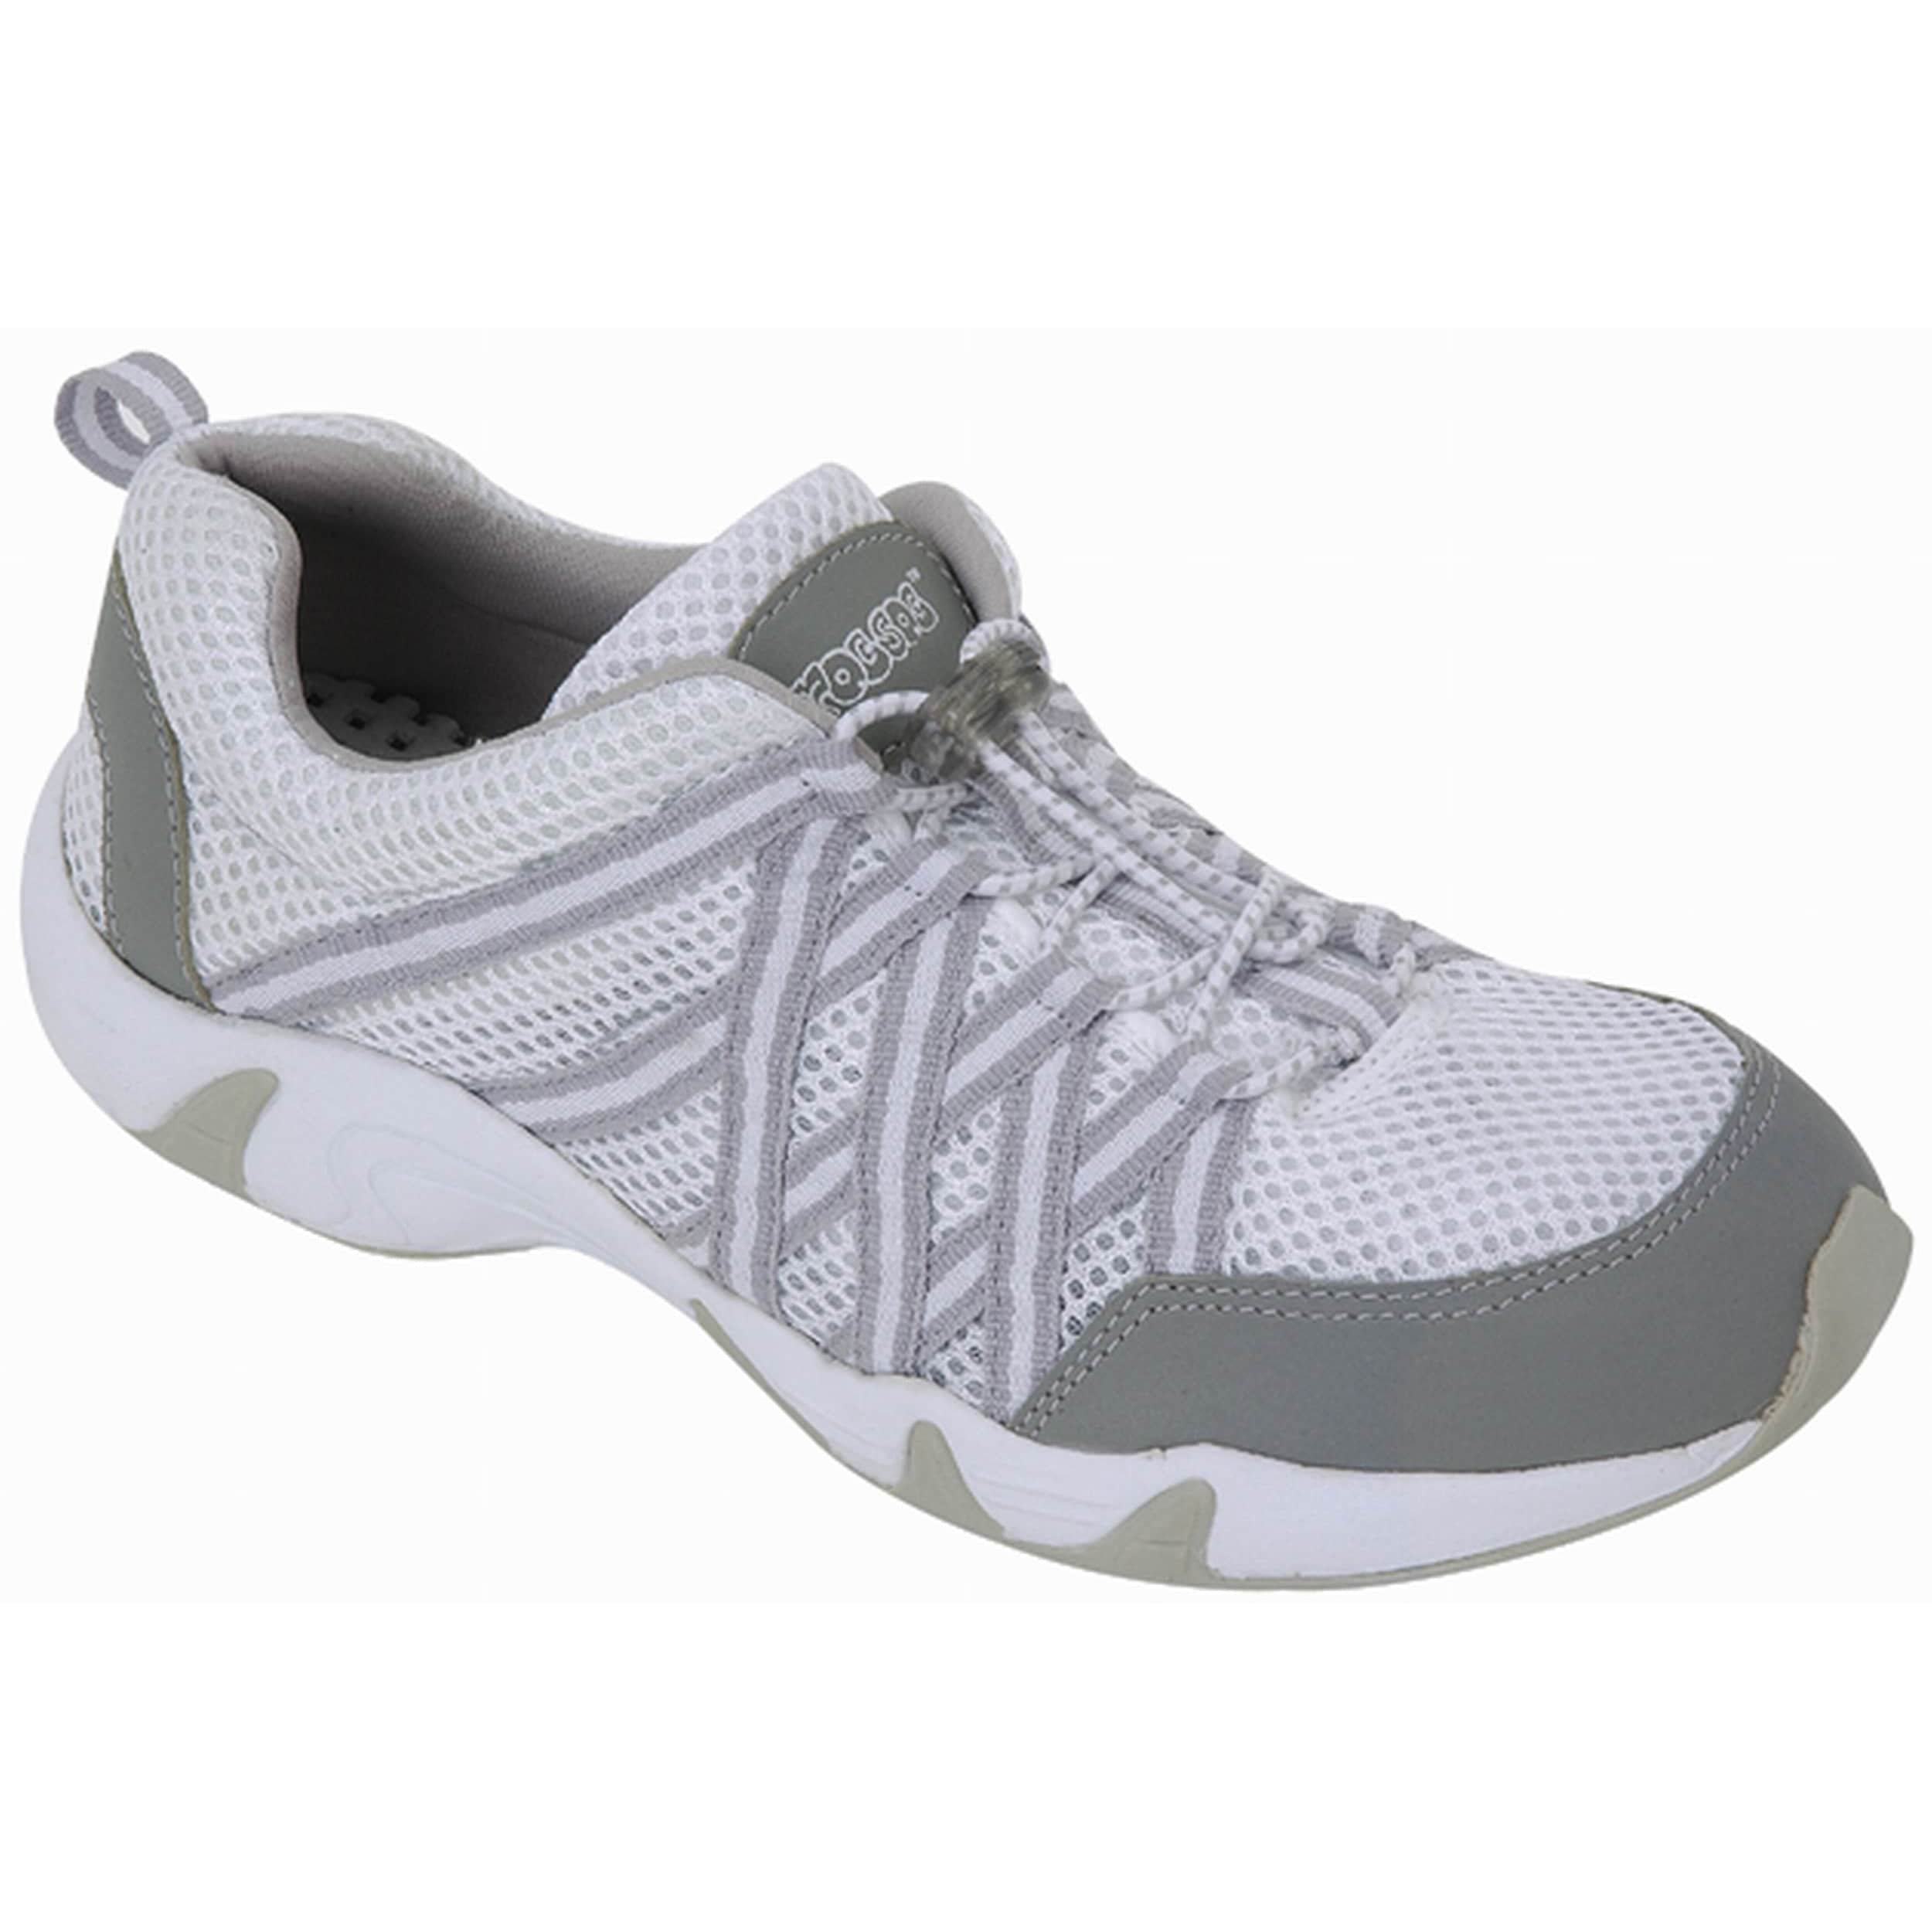 Women's Grey Athletic Shoes - Walmart.com